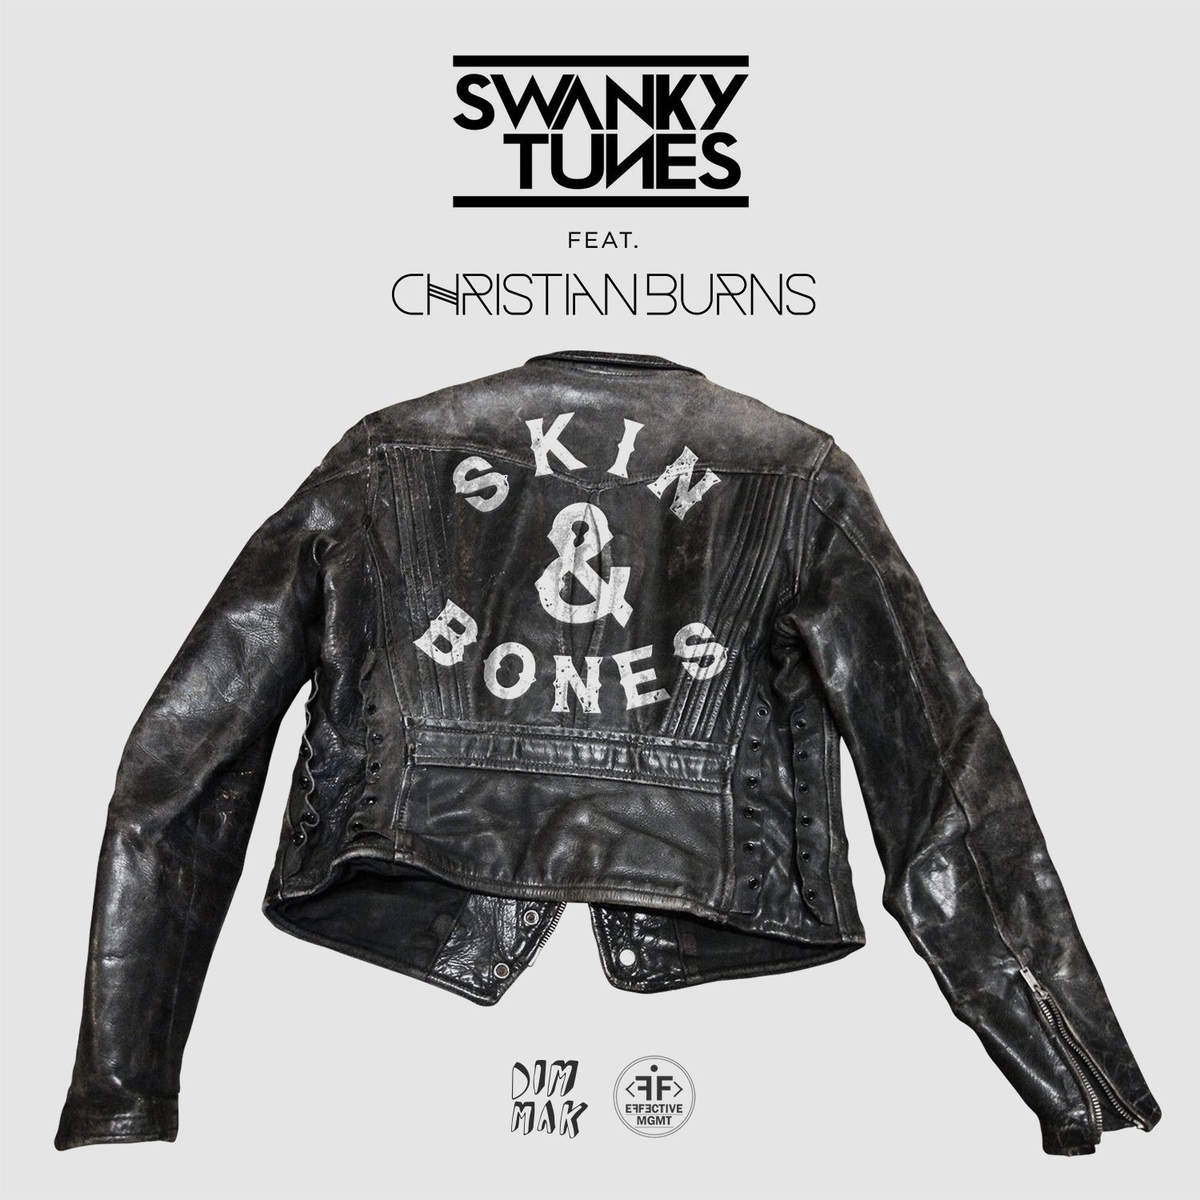 Swanky tunes going deep. Swanky Tunes Skin and Bones. Skin and Bones одежда. Костюм Swanky. Christian Burns.